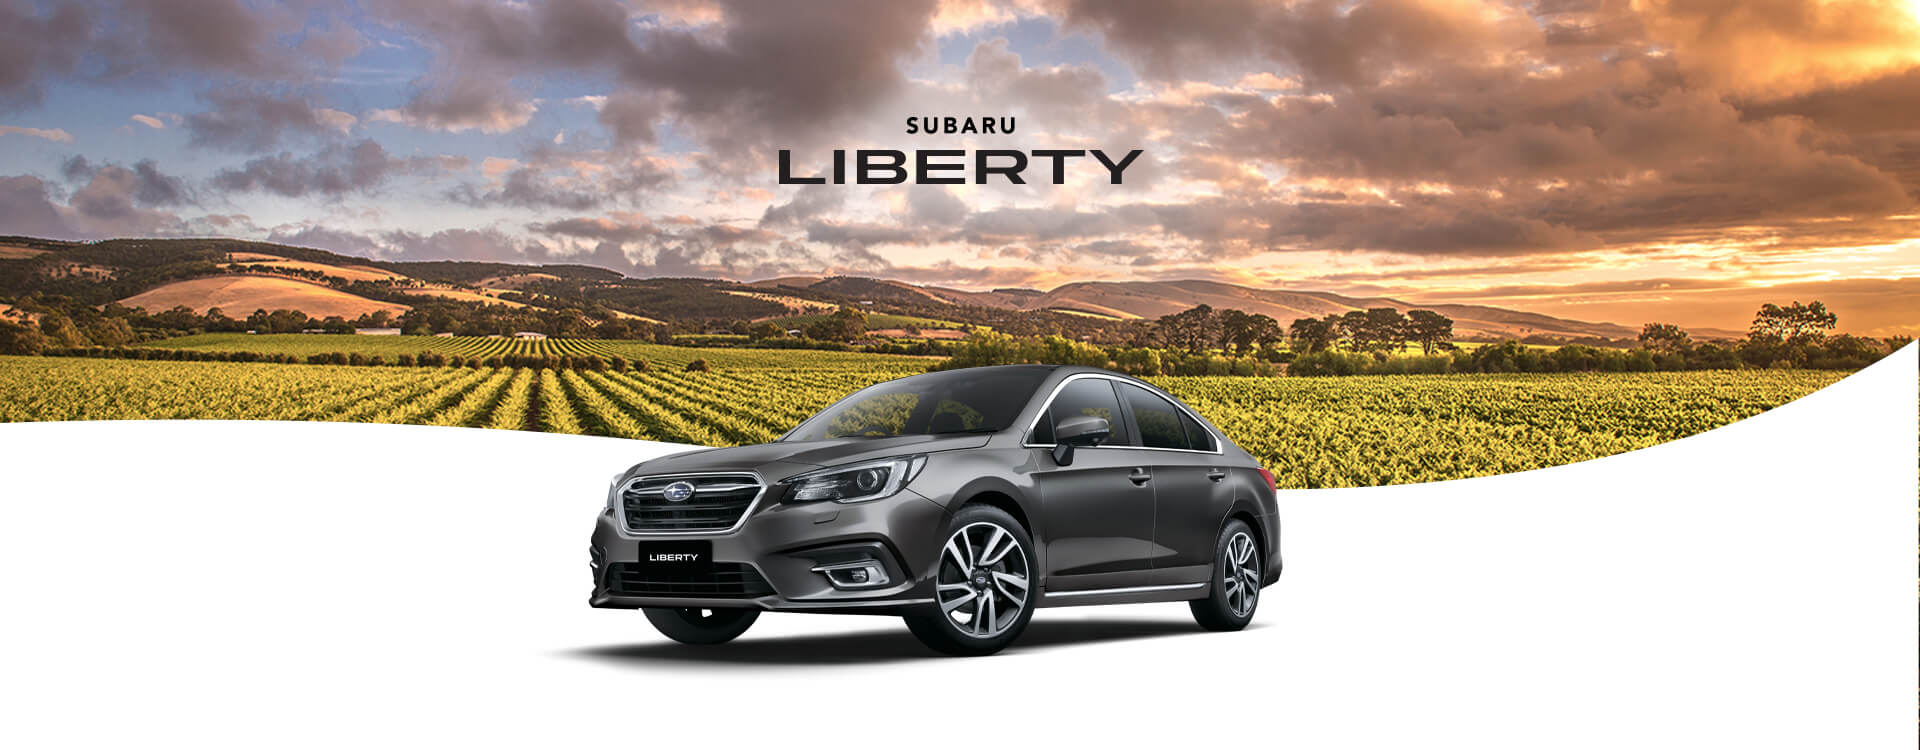 Liberty Subaru Liberty